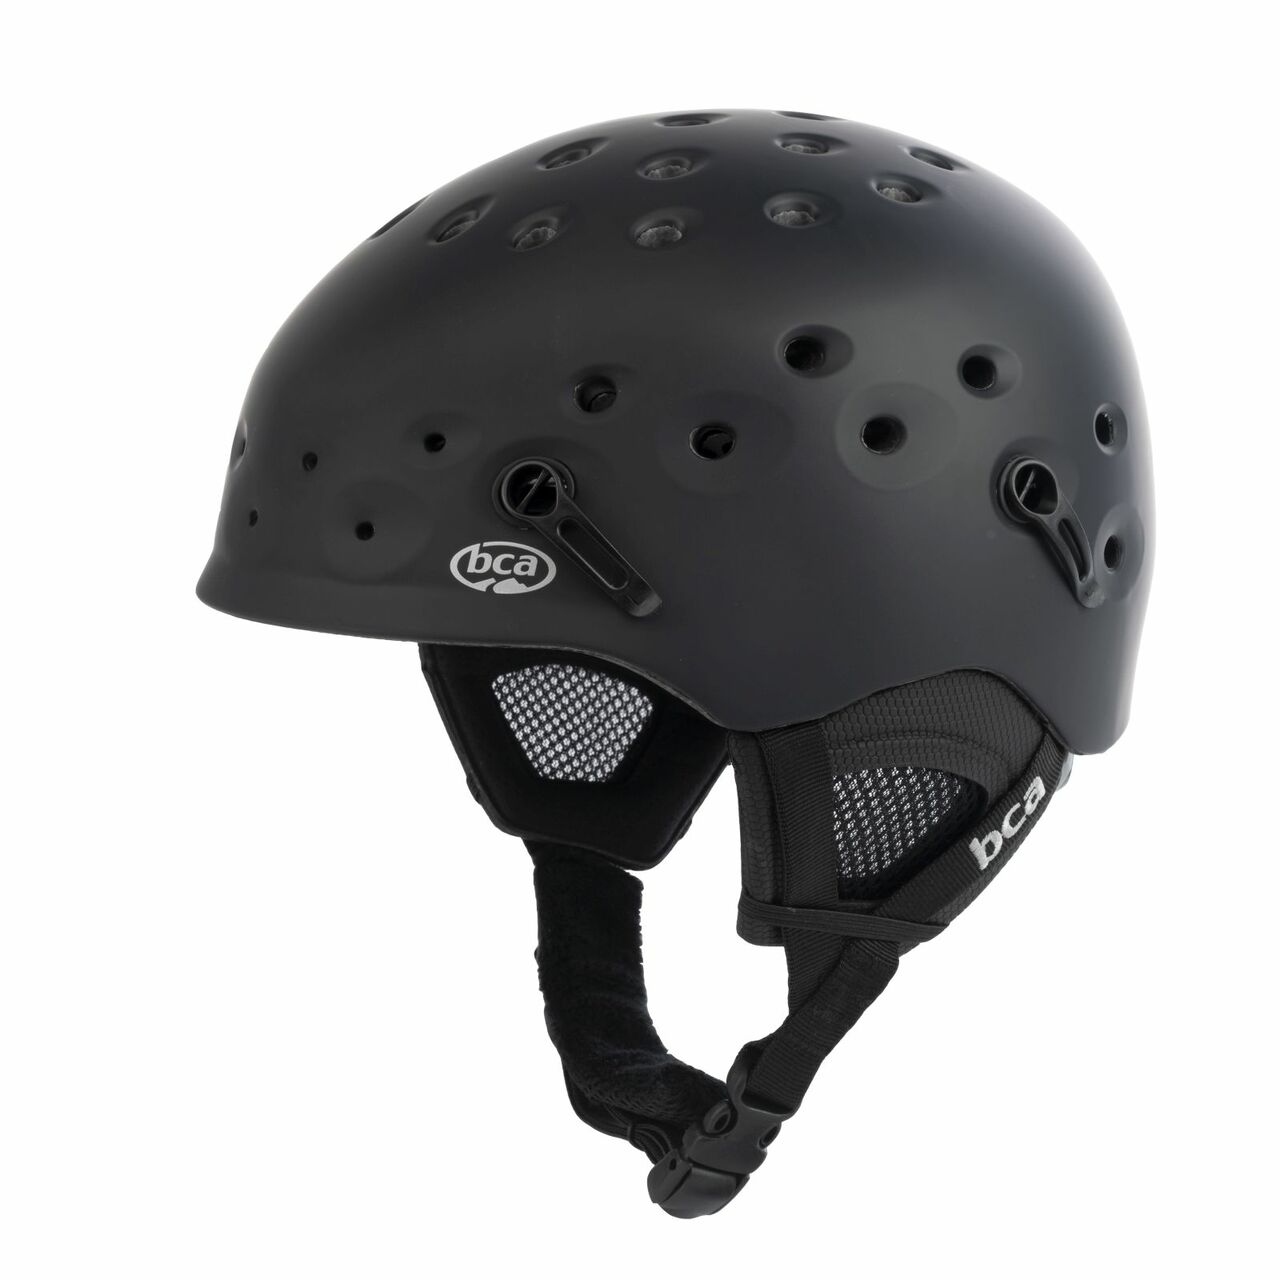 BC Air Backcountry Ski-Snowboard Helmet, solid black color.